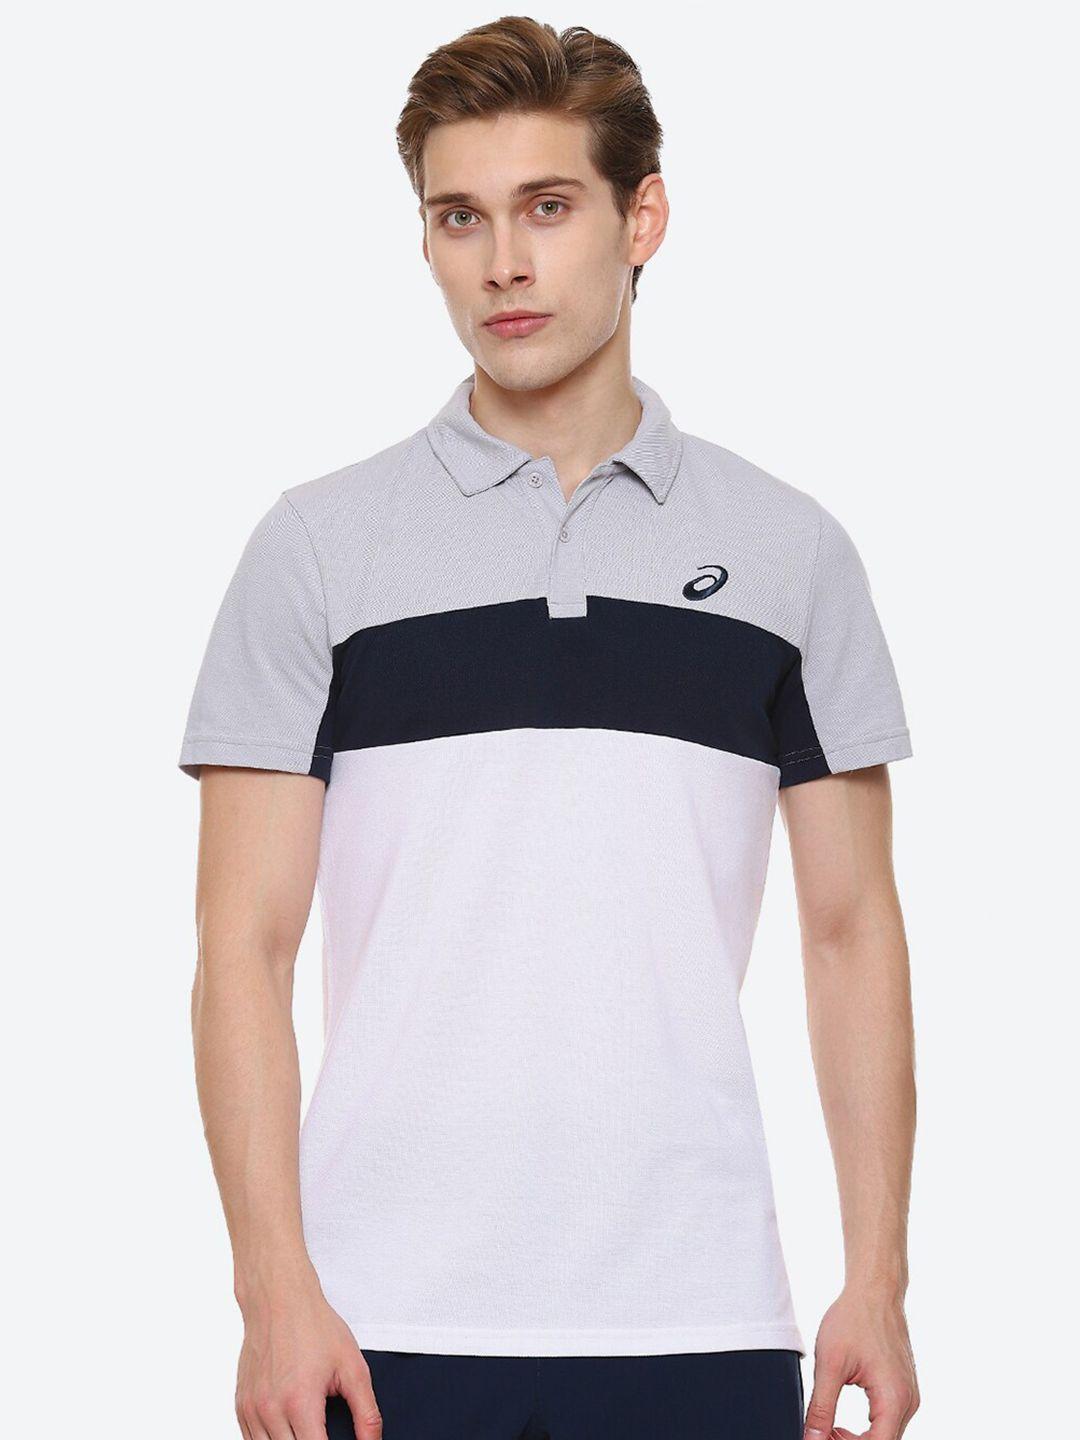 asics-colorblocked-short-sleeves-polo-collar-sports-t-shirt